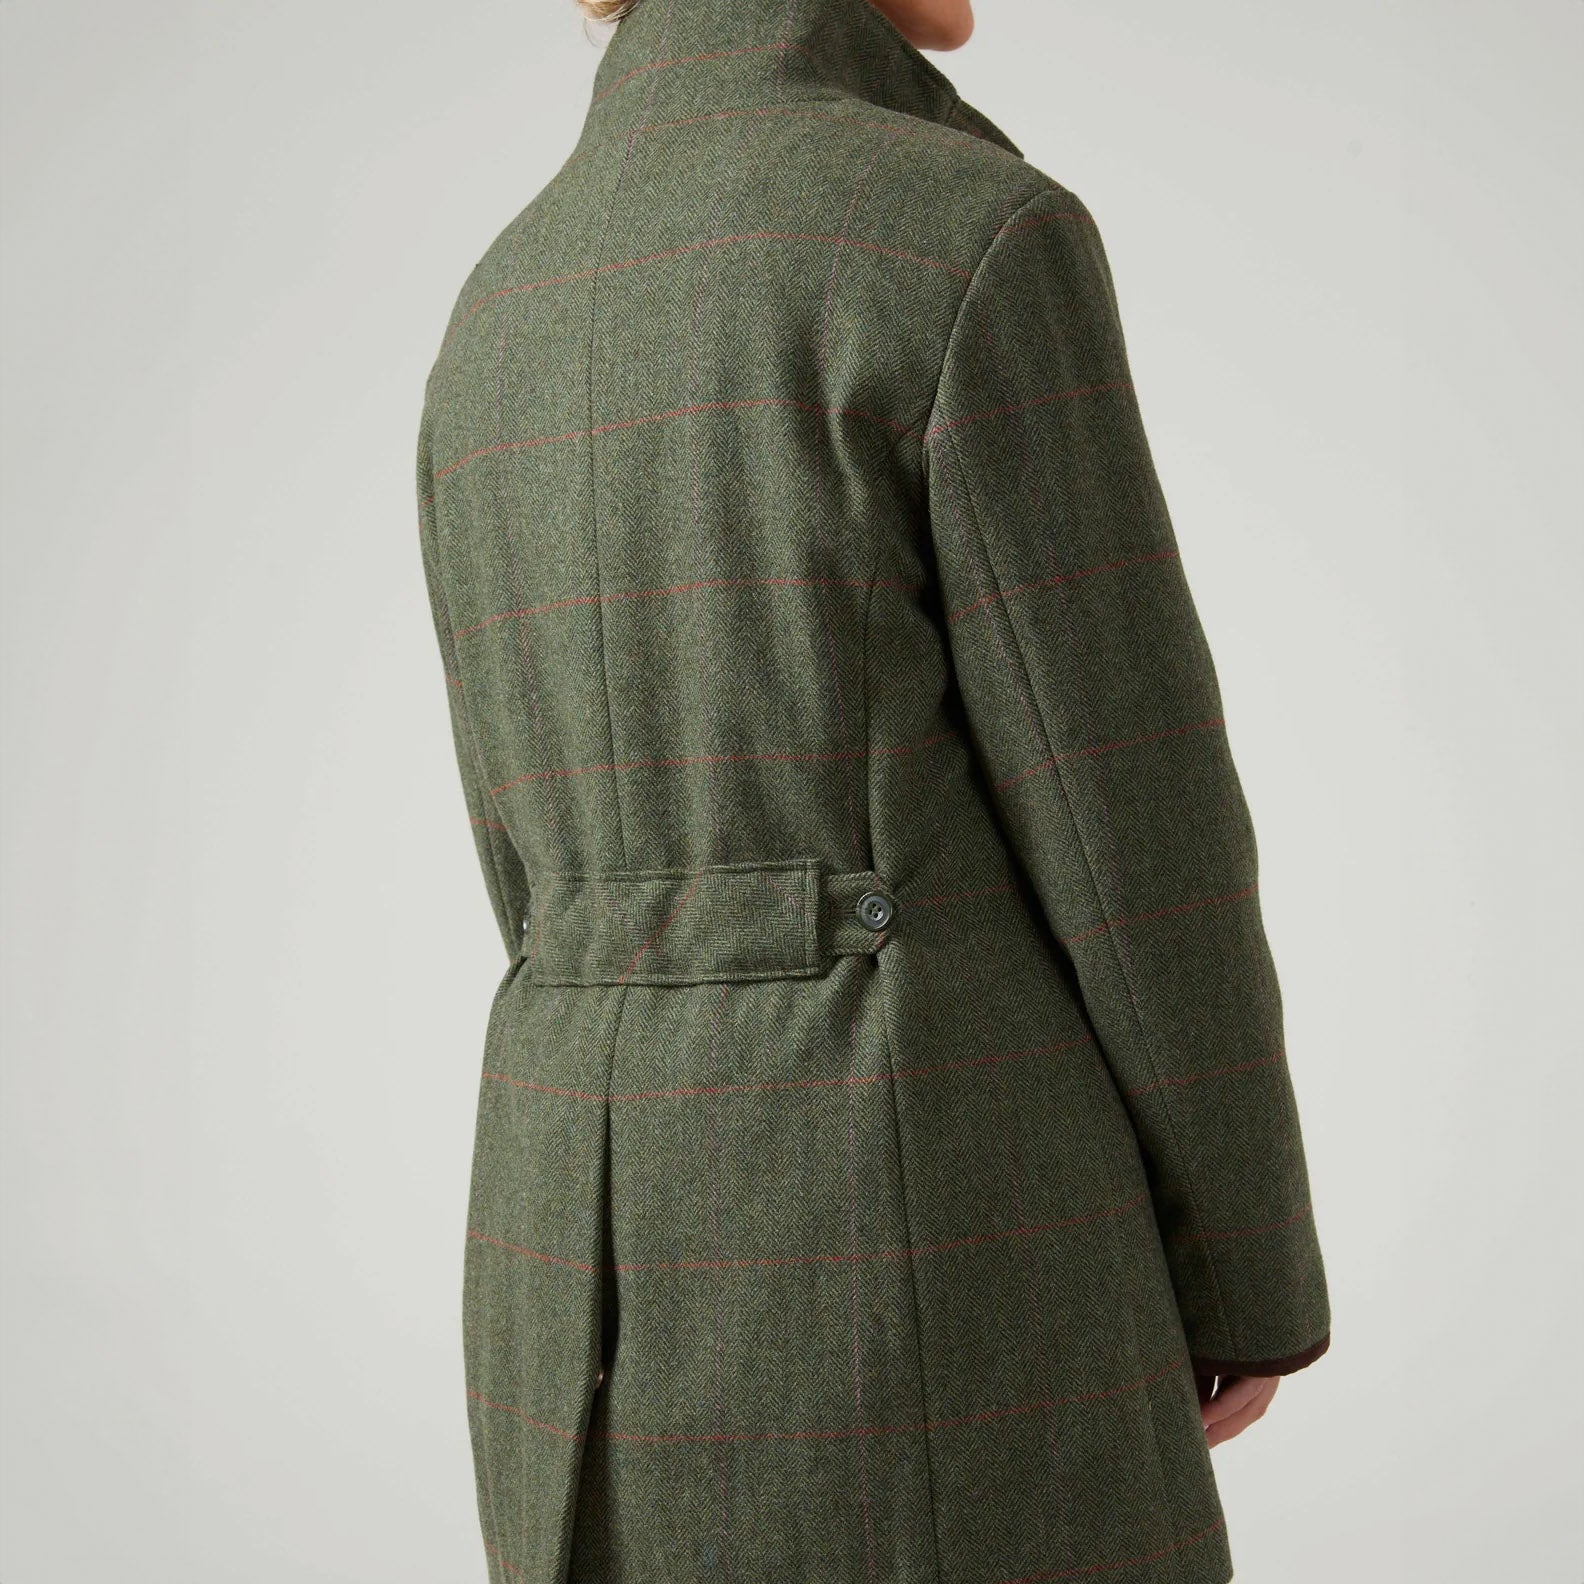 Alan Paine Combrook Ladies Tweed Field Jacket